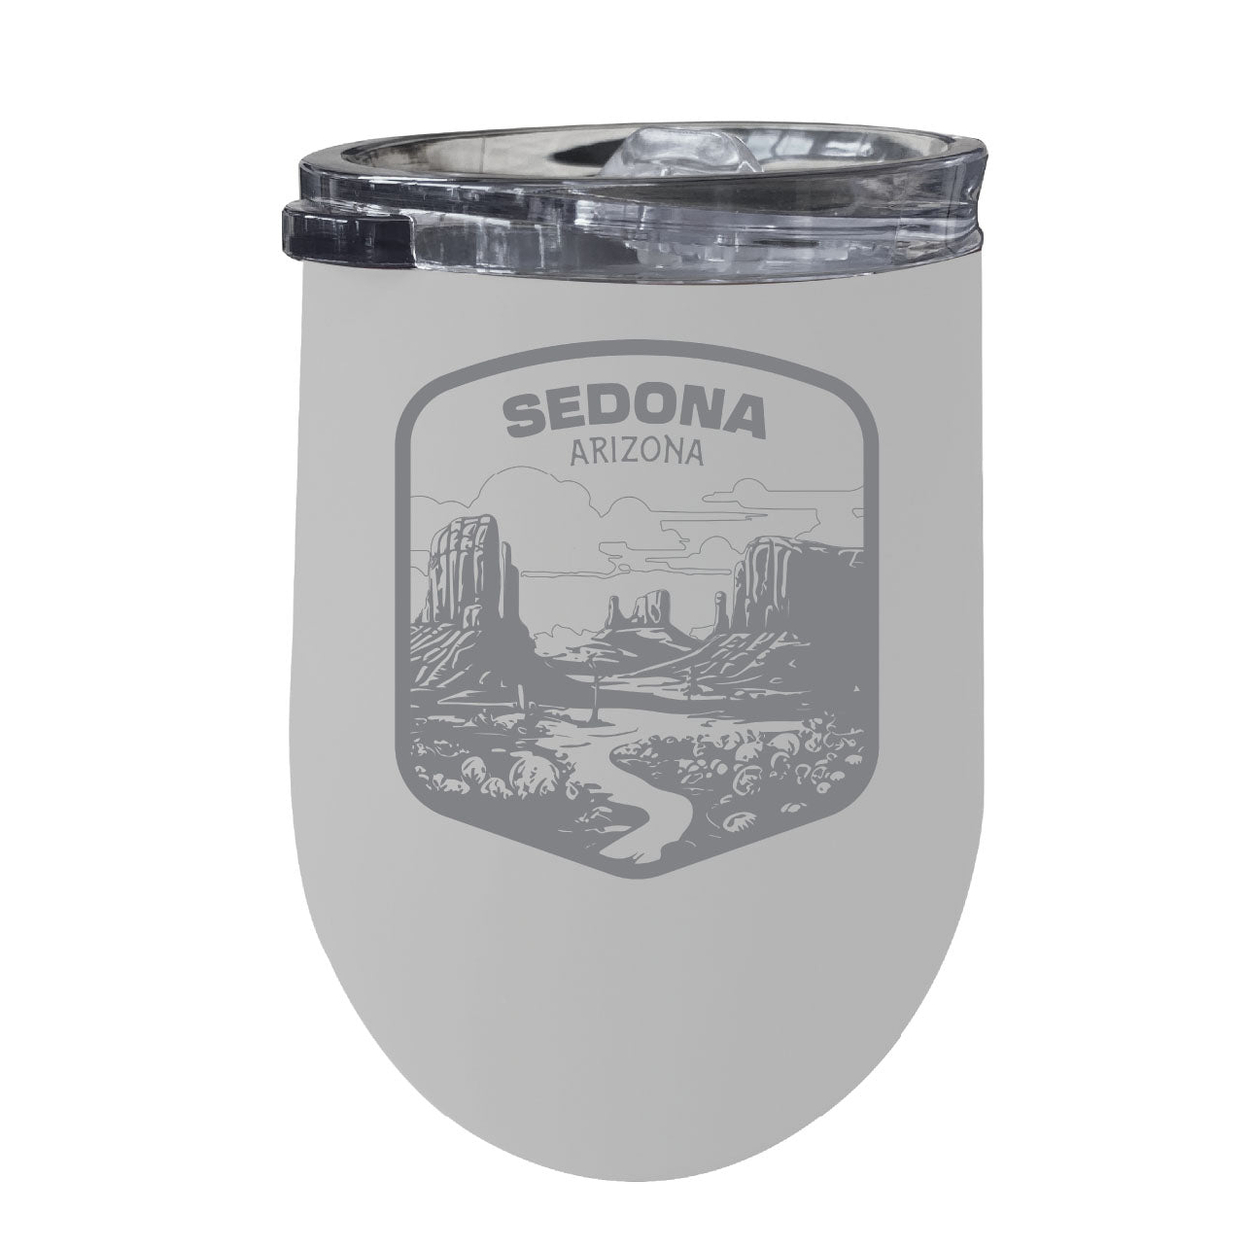 Sedona Arizona Souvenir 12 Oz Engraved Insulated Wine Stainless Steel Tumbler - Rainbow Glitter Gray,,4-Pack